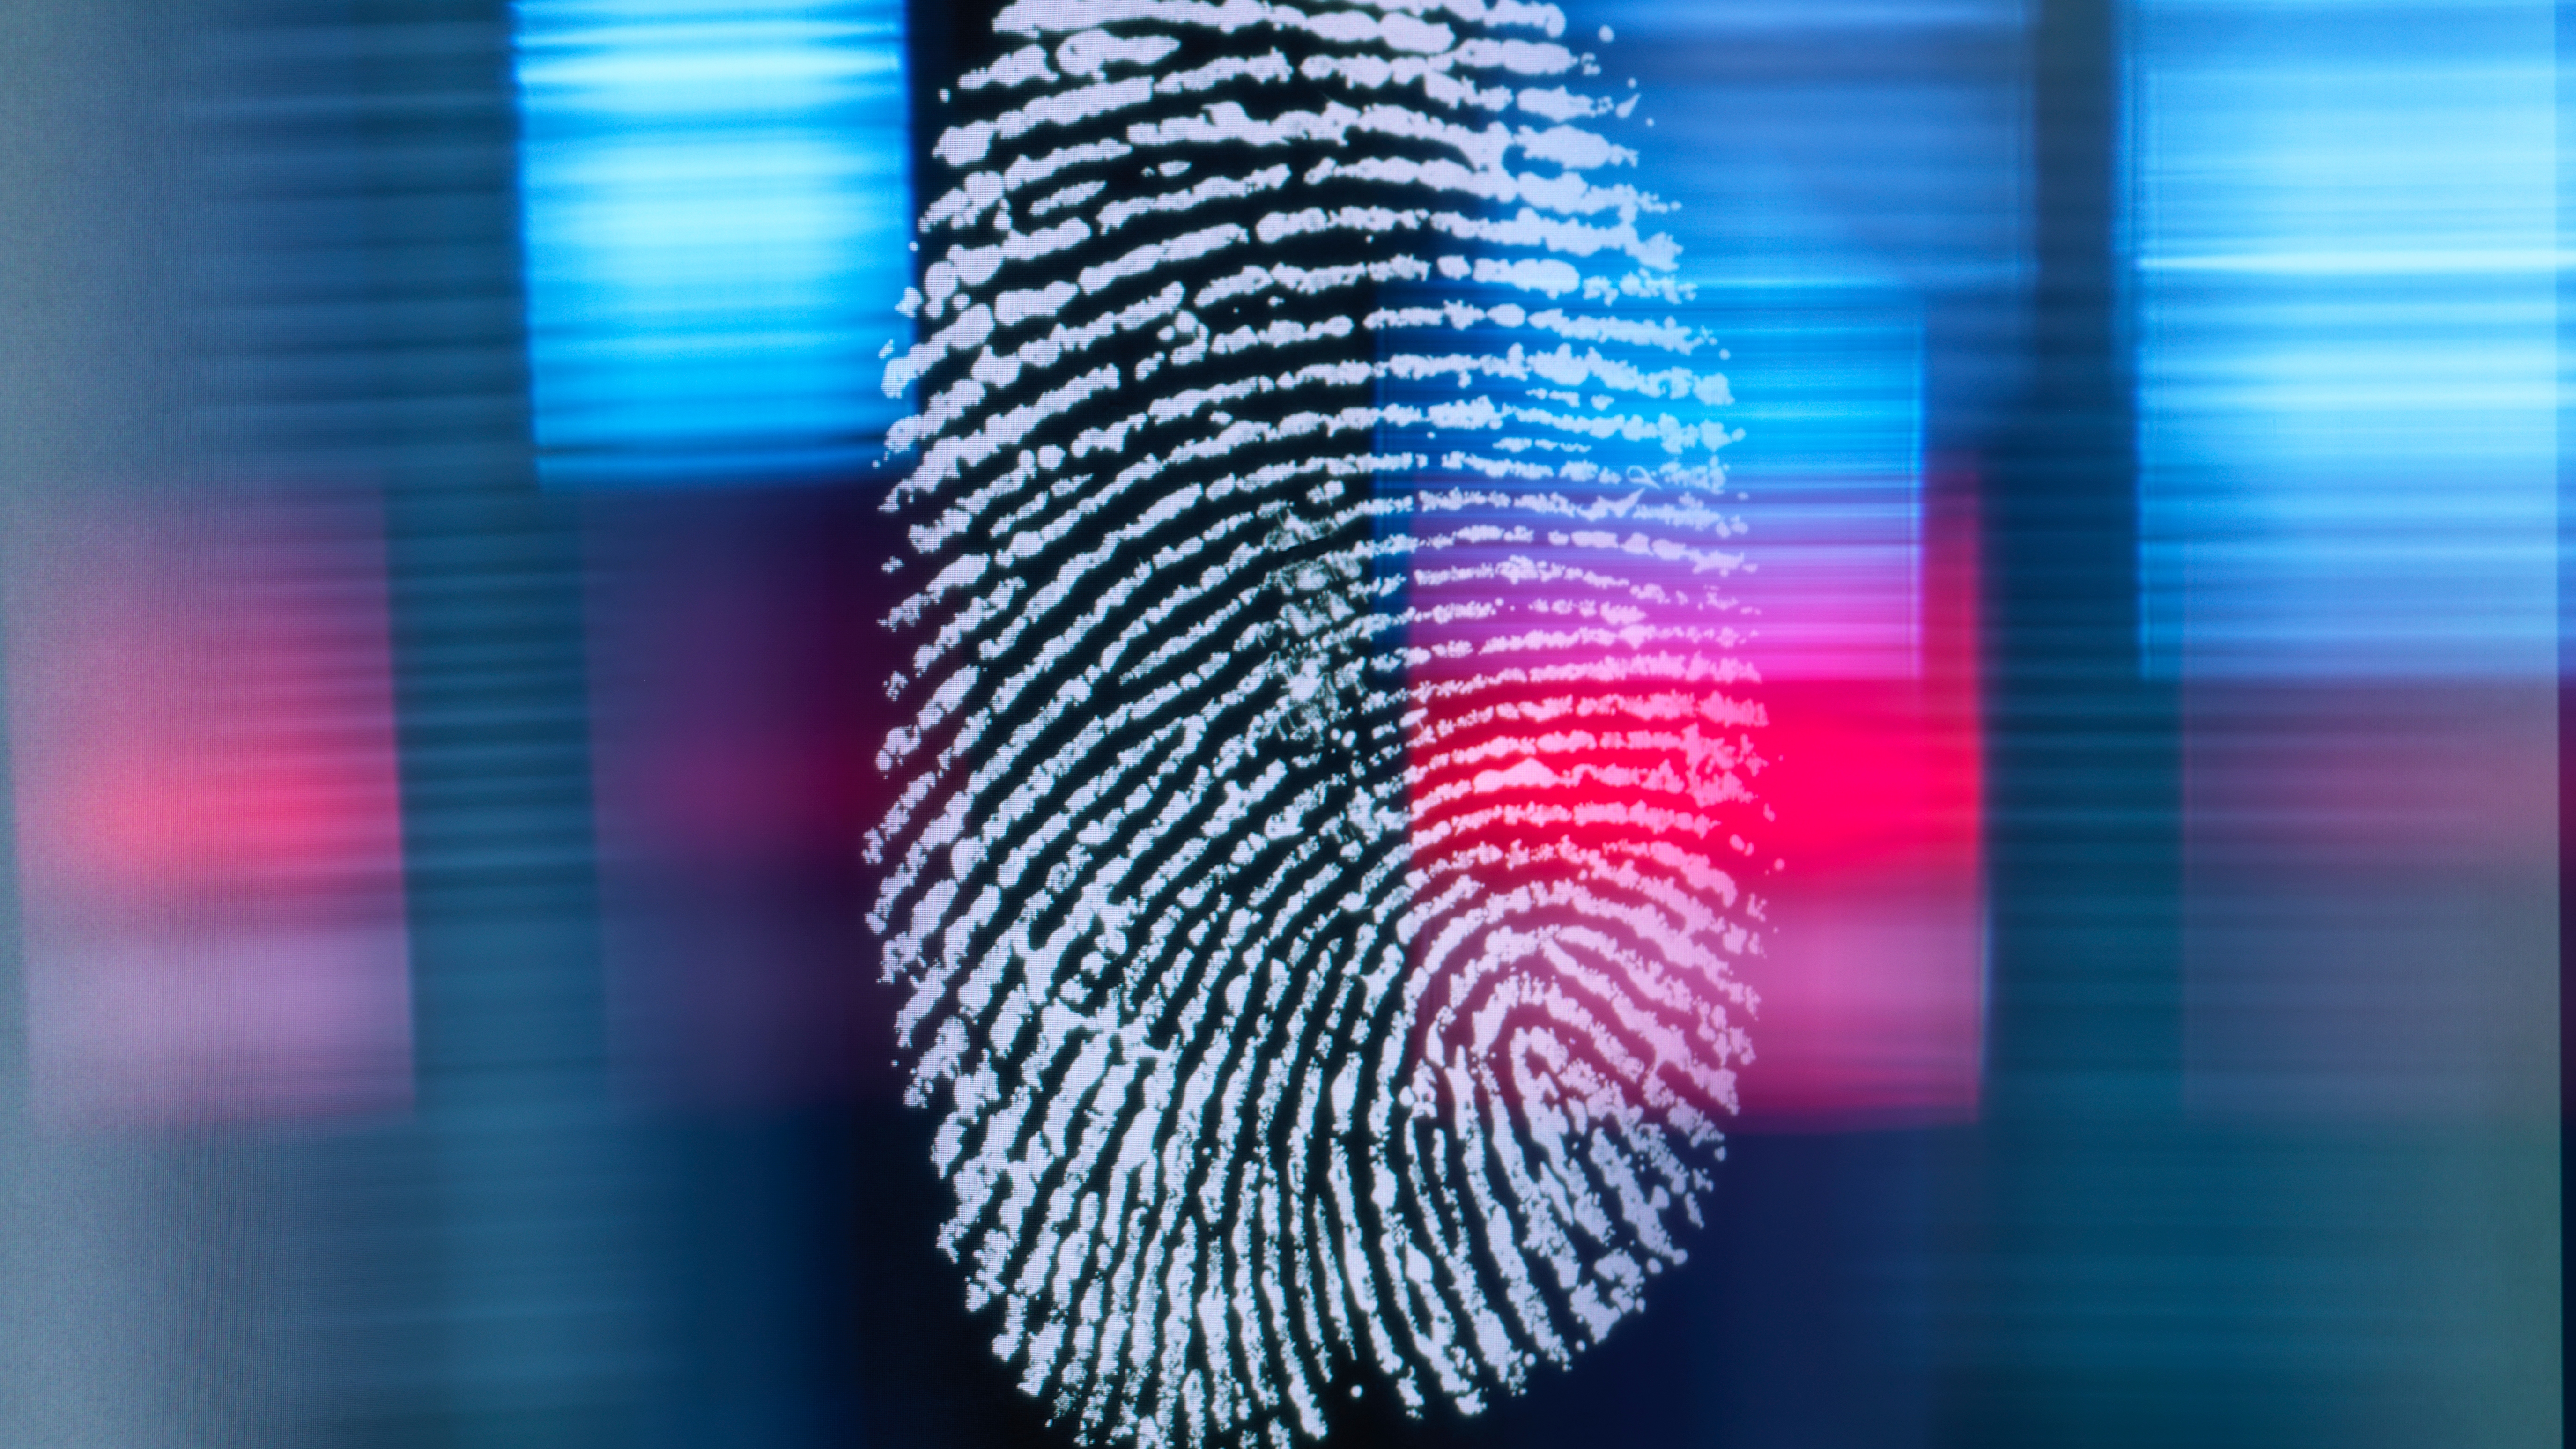 Finger print on digital screen being scanned